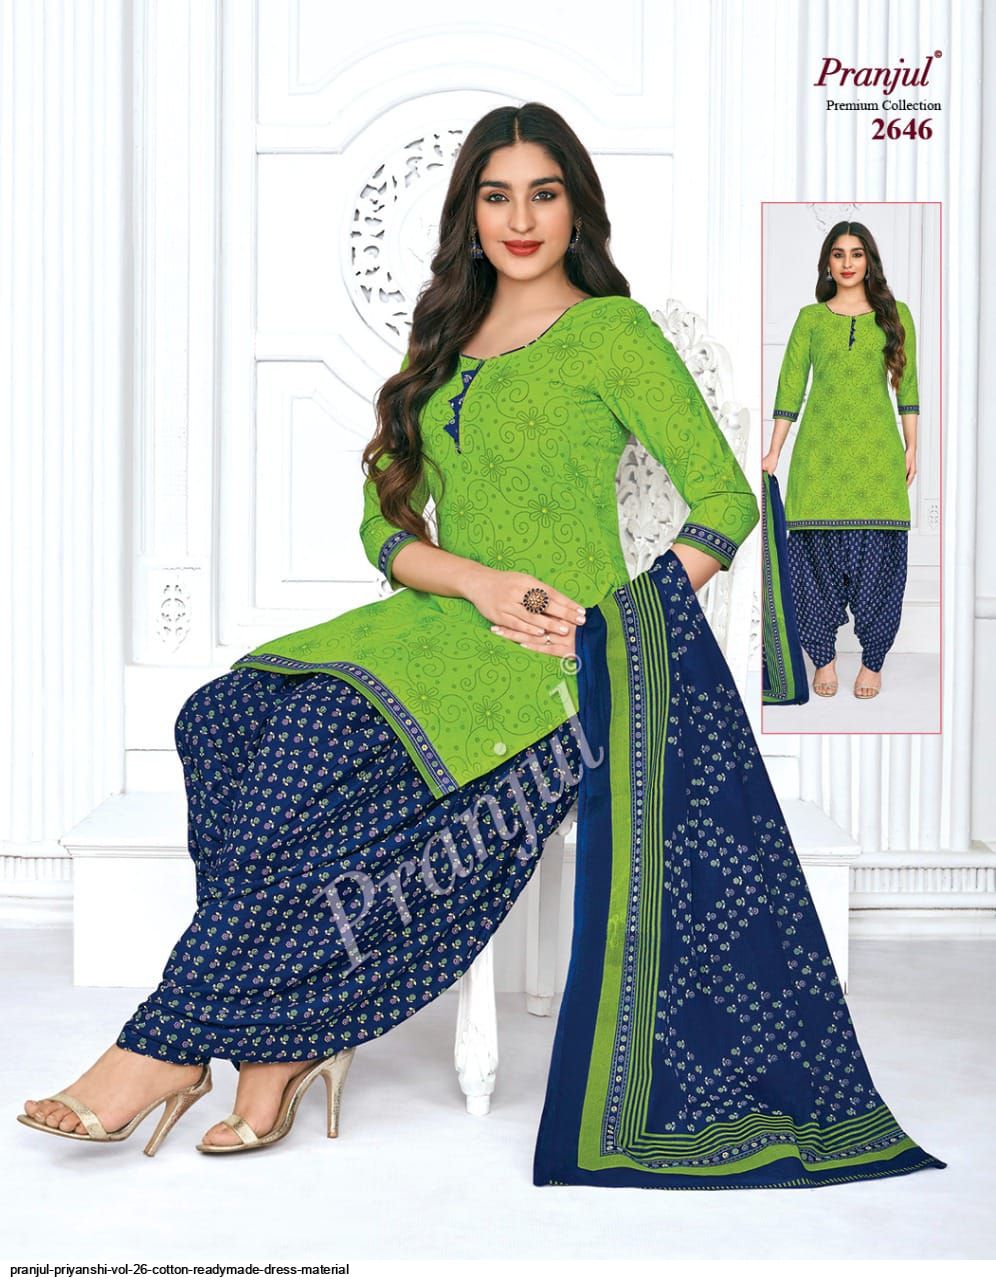 pranjul priyanshi vol 26 cotton readymade dress material 8131